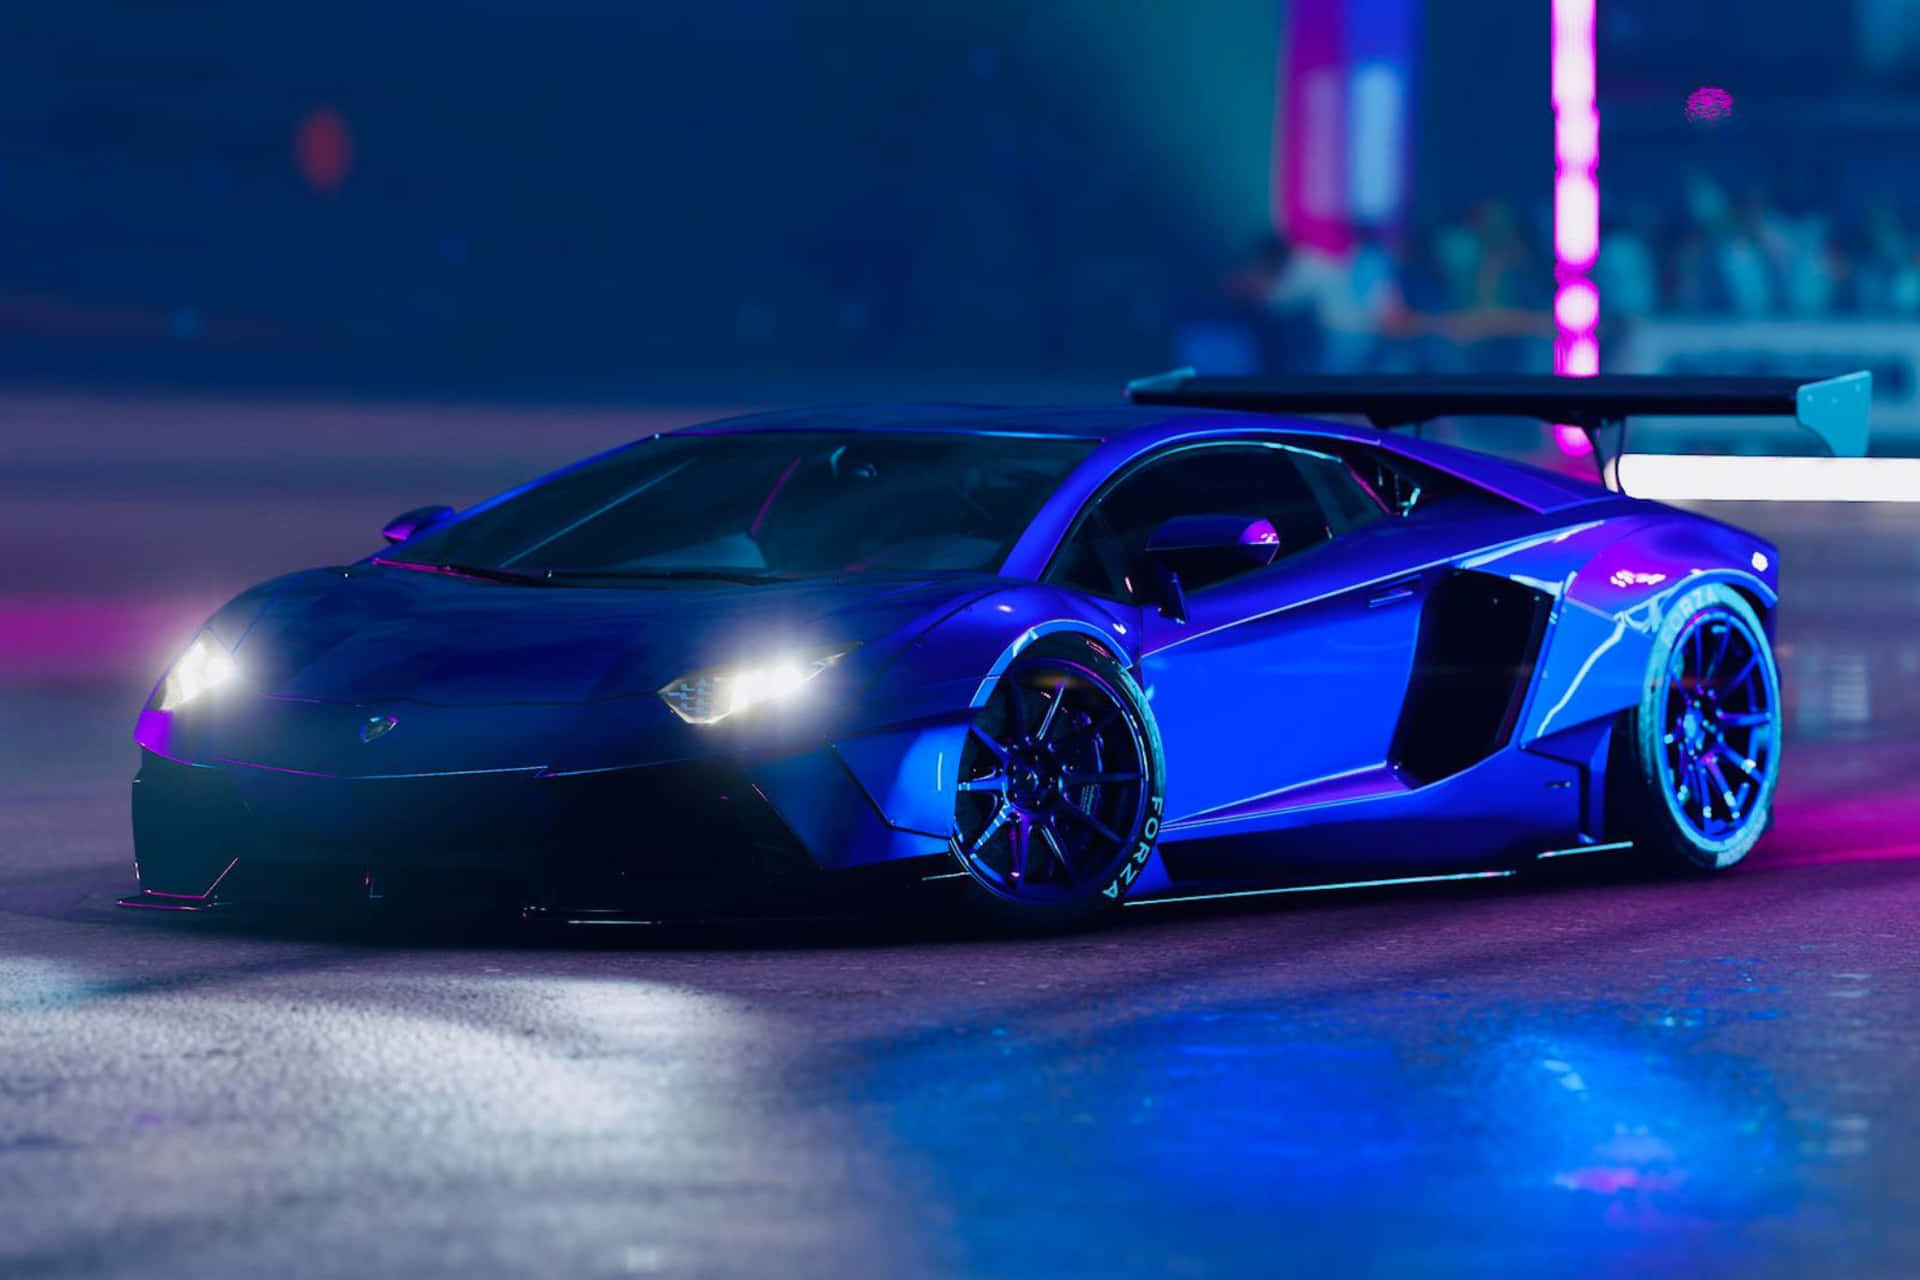 Neon Infused Nighttime Lamborghini Wallpaper